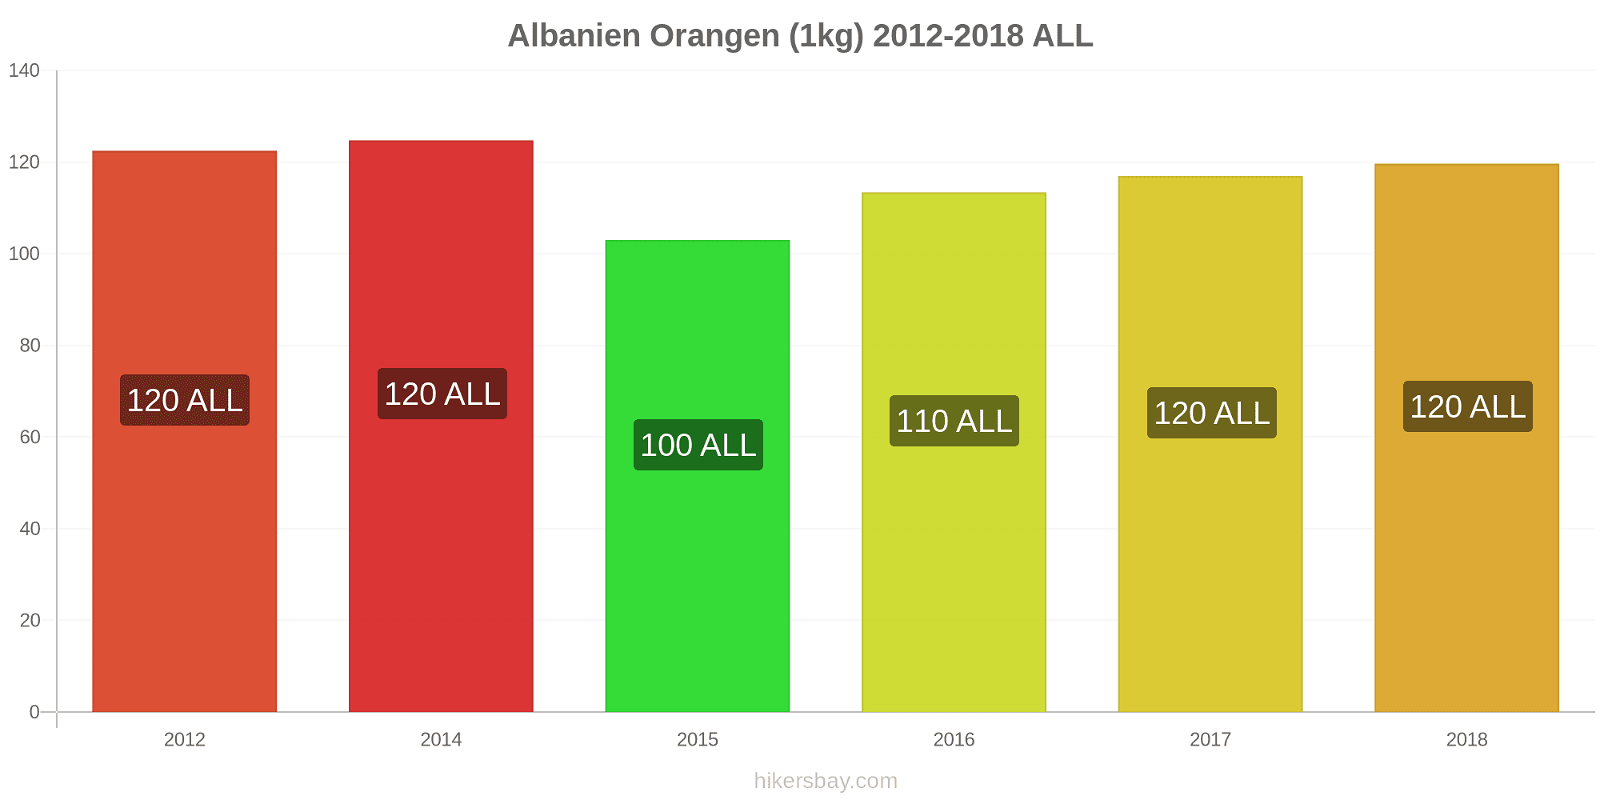 Albanien Preisänderungen Orangen (1kg) hikersbay.com